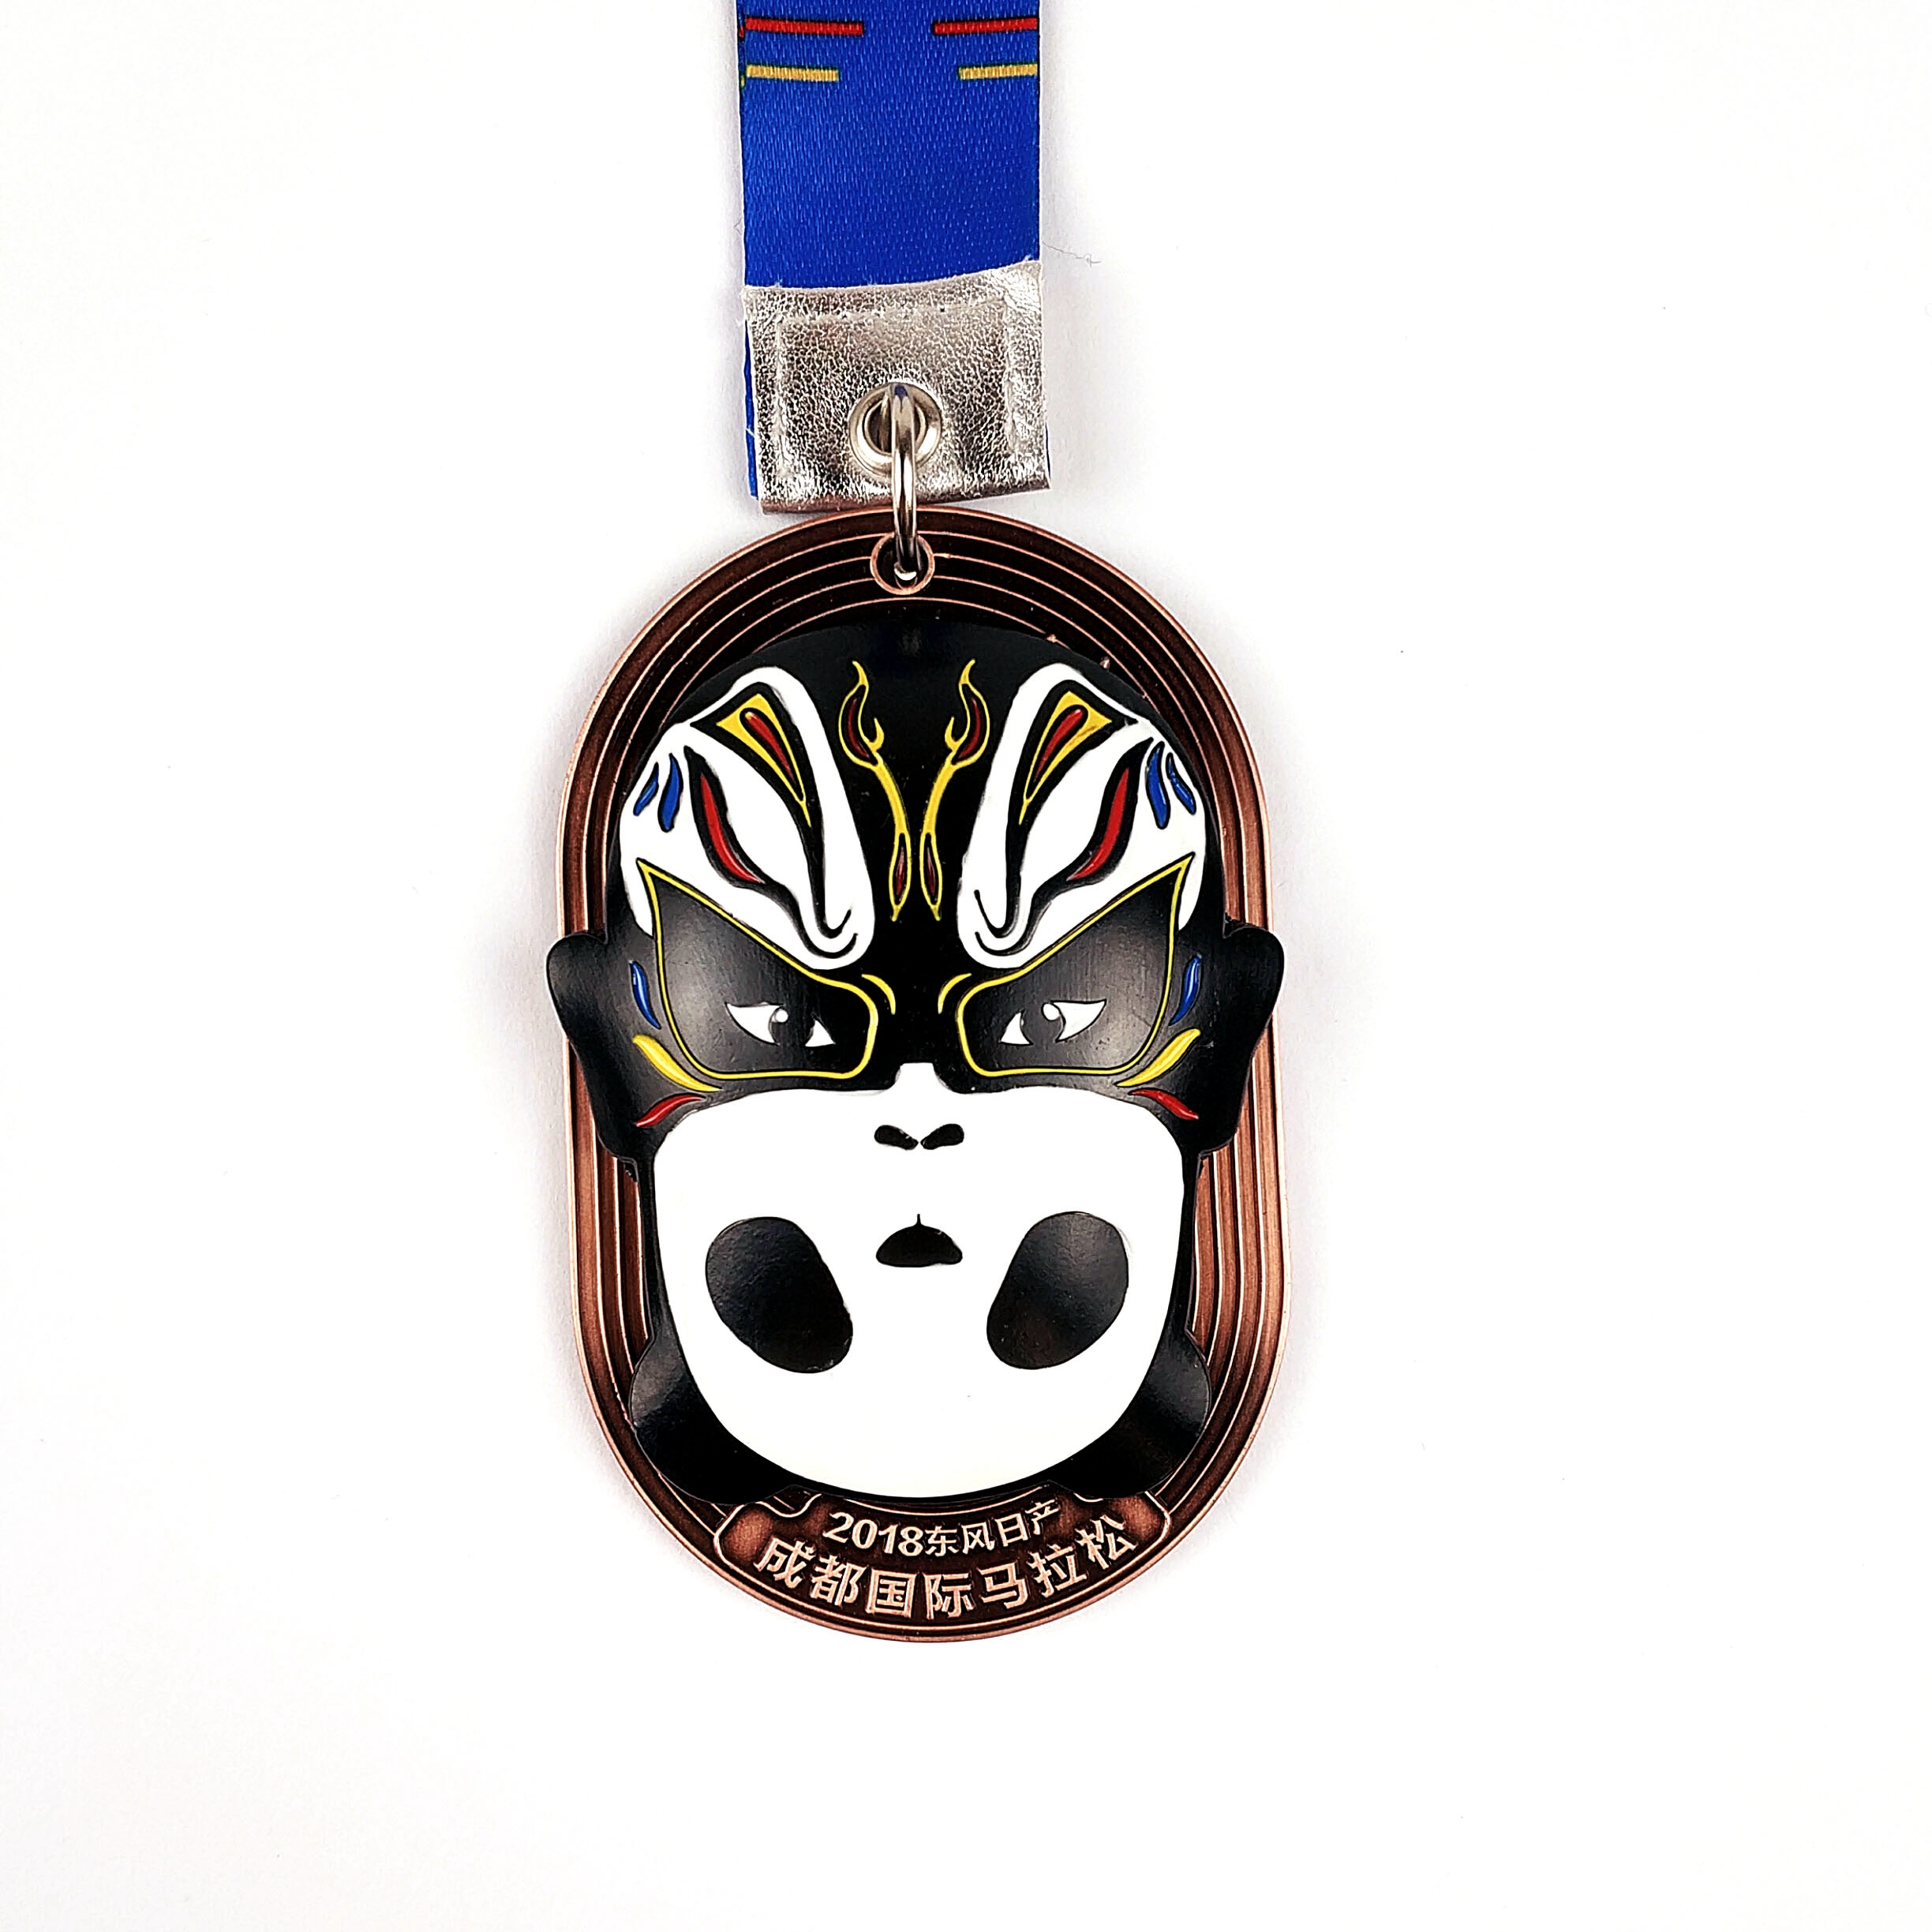 3D Panda and Sichuan Opera Face Spinning Medal (2)